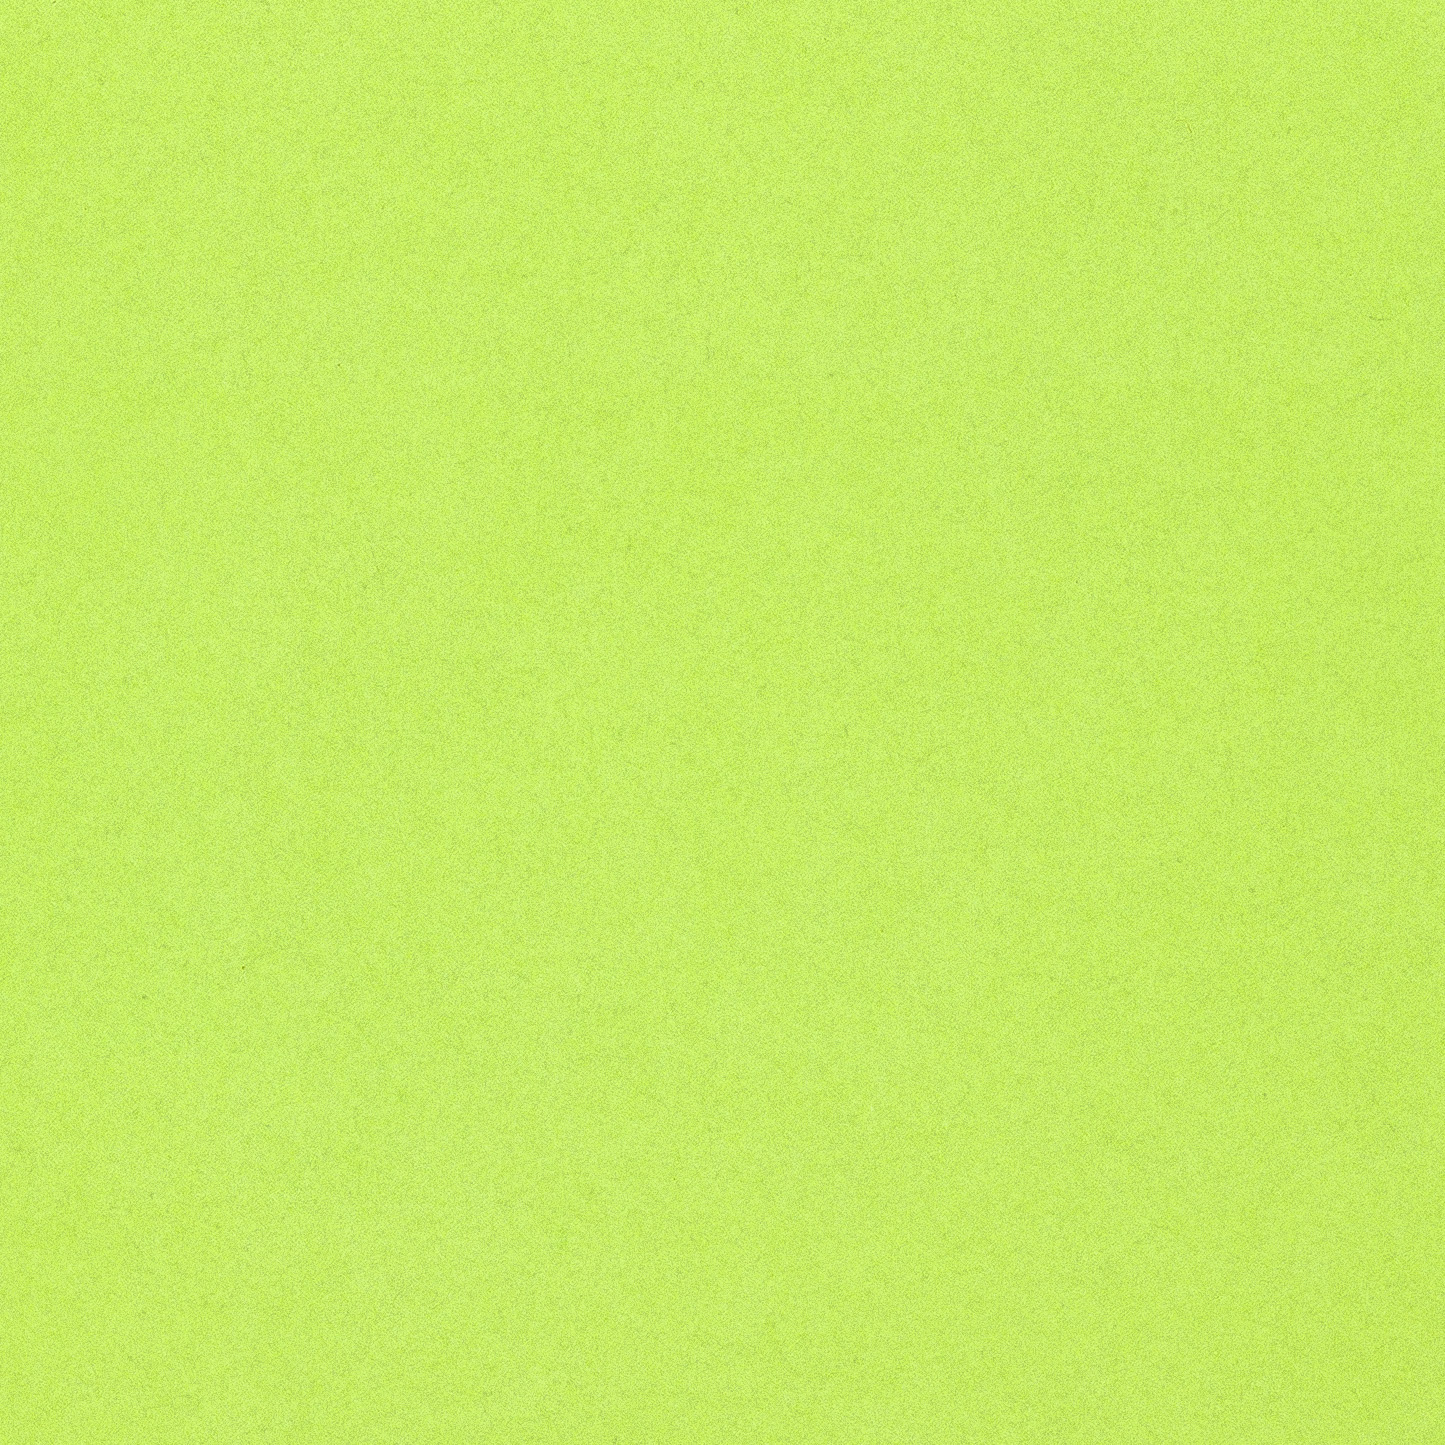 Translucent - Lime Green 100gsm